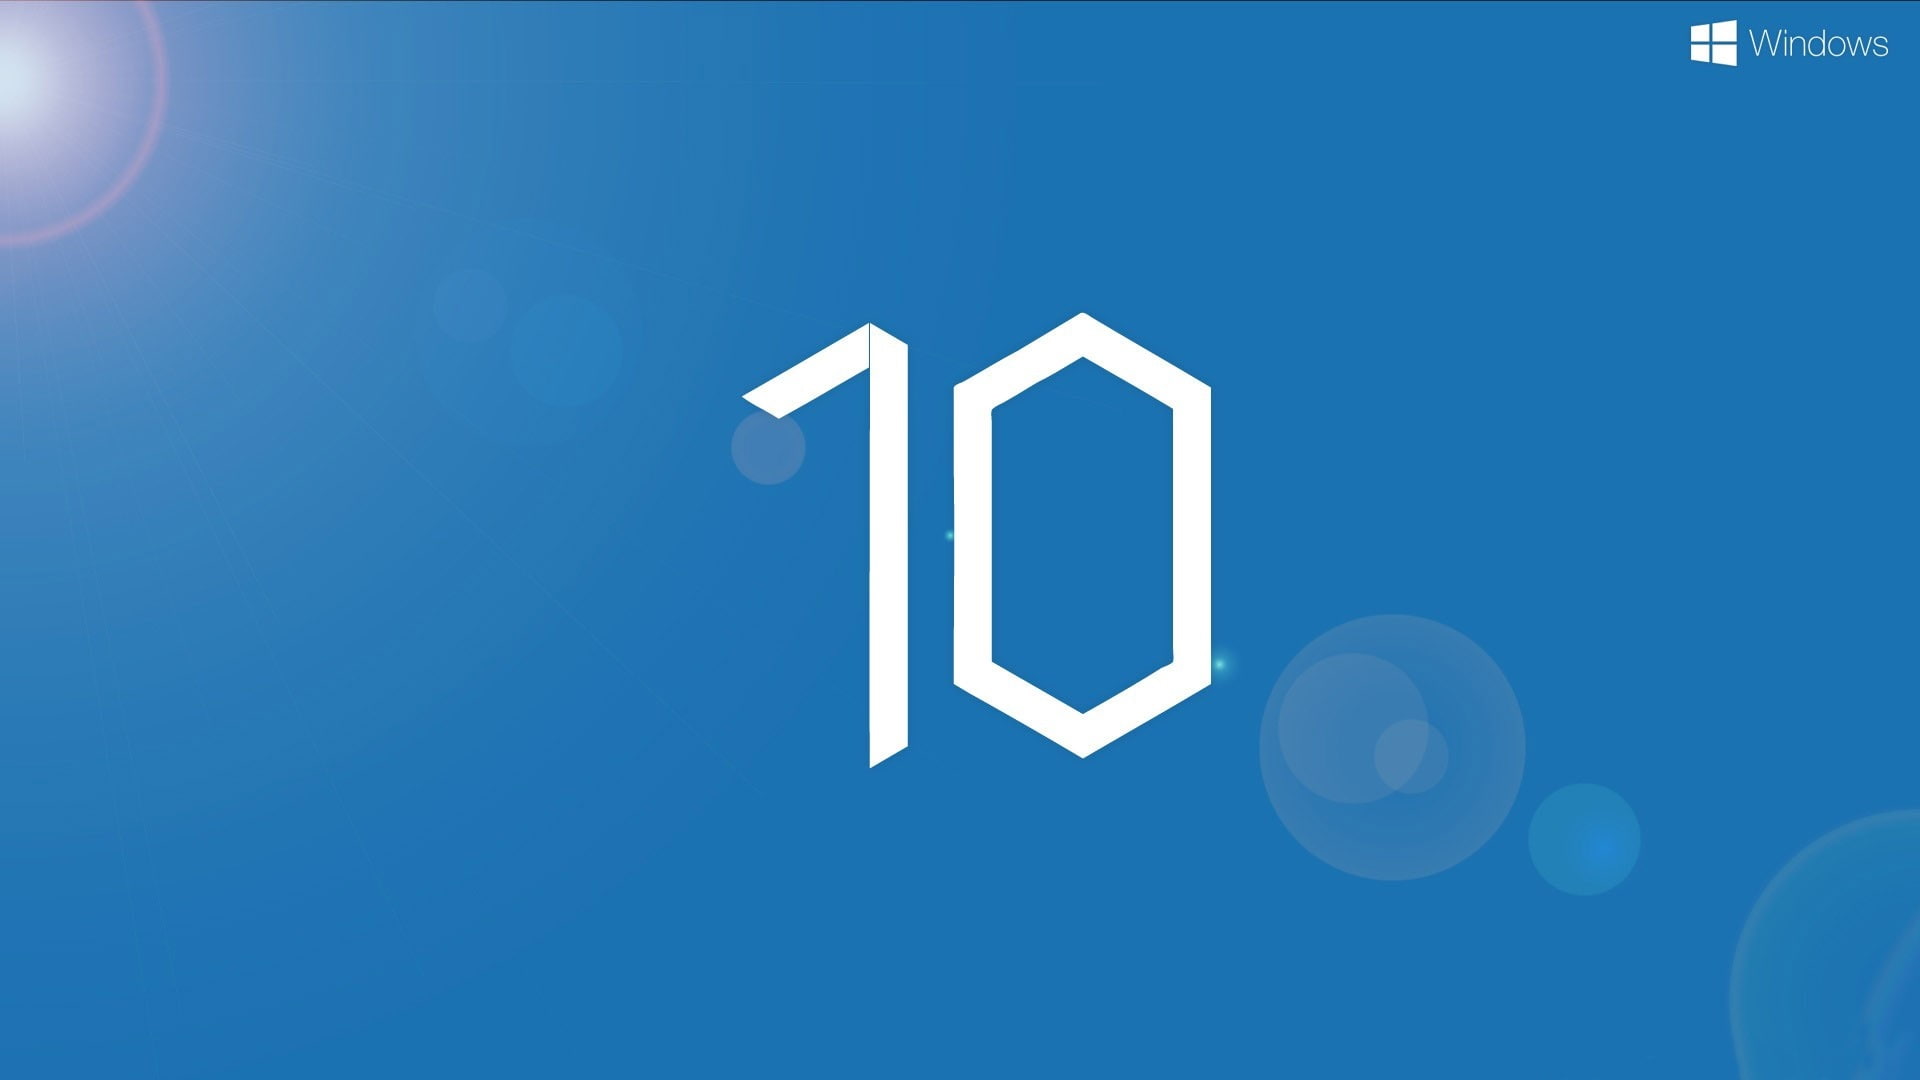 Windows 10 system logo, blue background